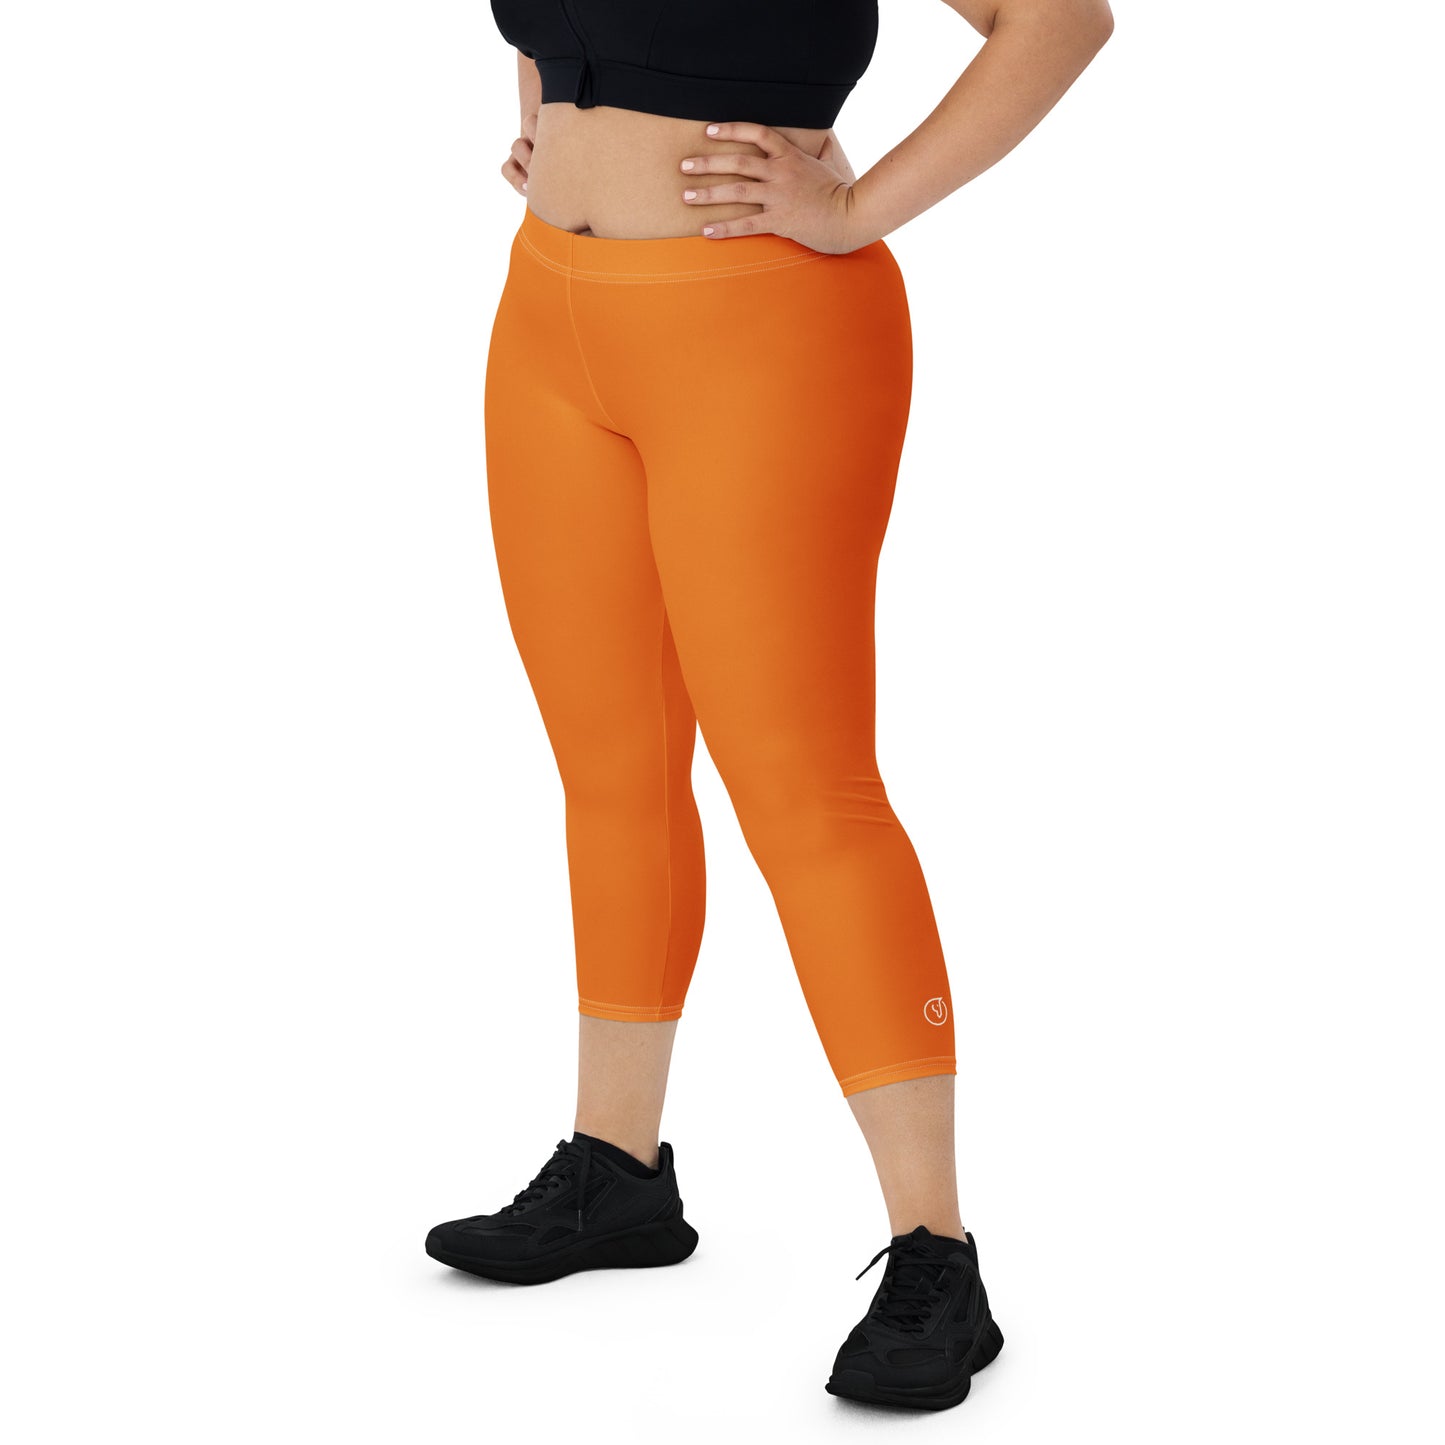 Humble Sportswear, women’s color match leggings, women’s capri leggings, orange leggings